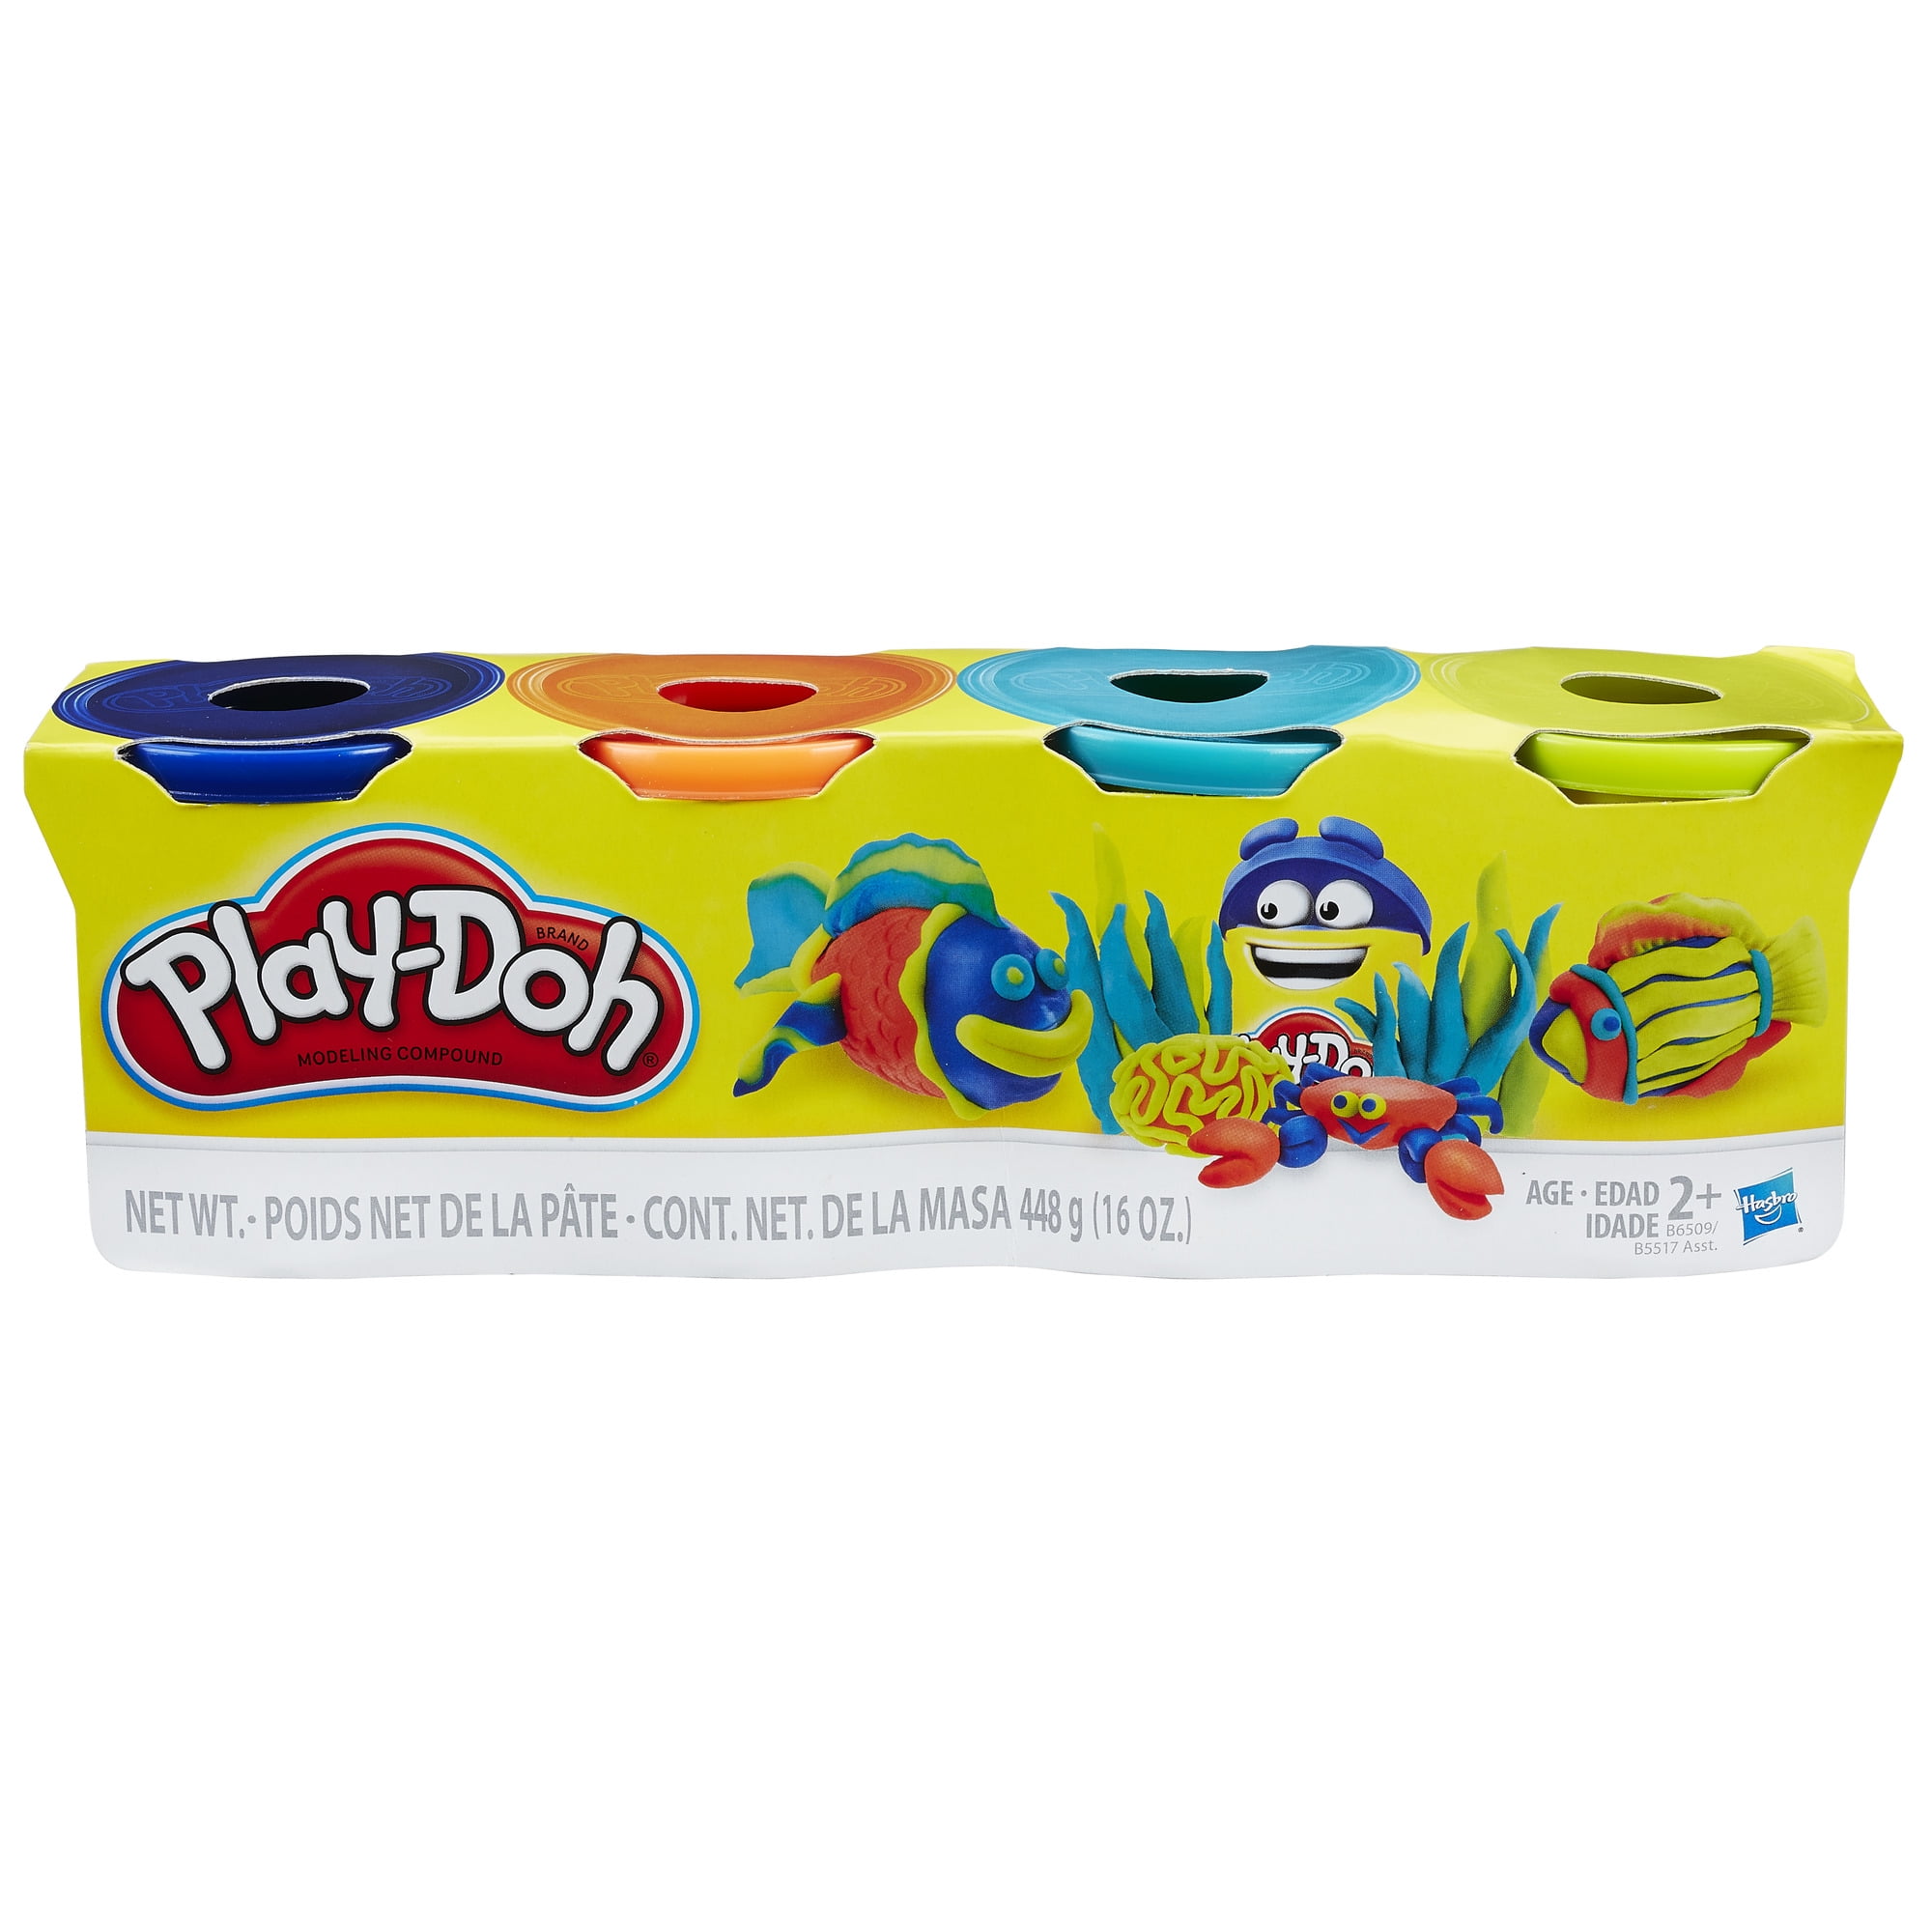 Play-Doh vs. Modeling Clay - Art For Kids Hub 